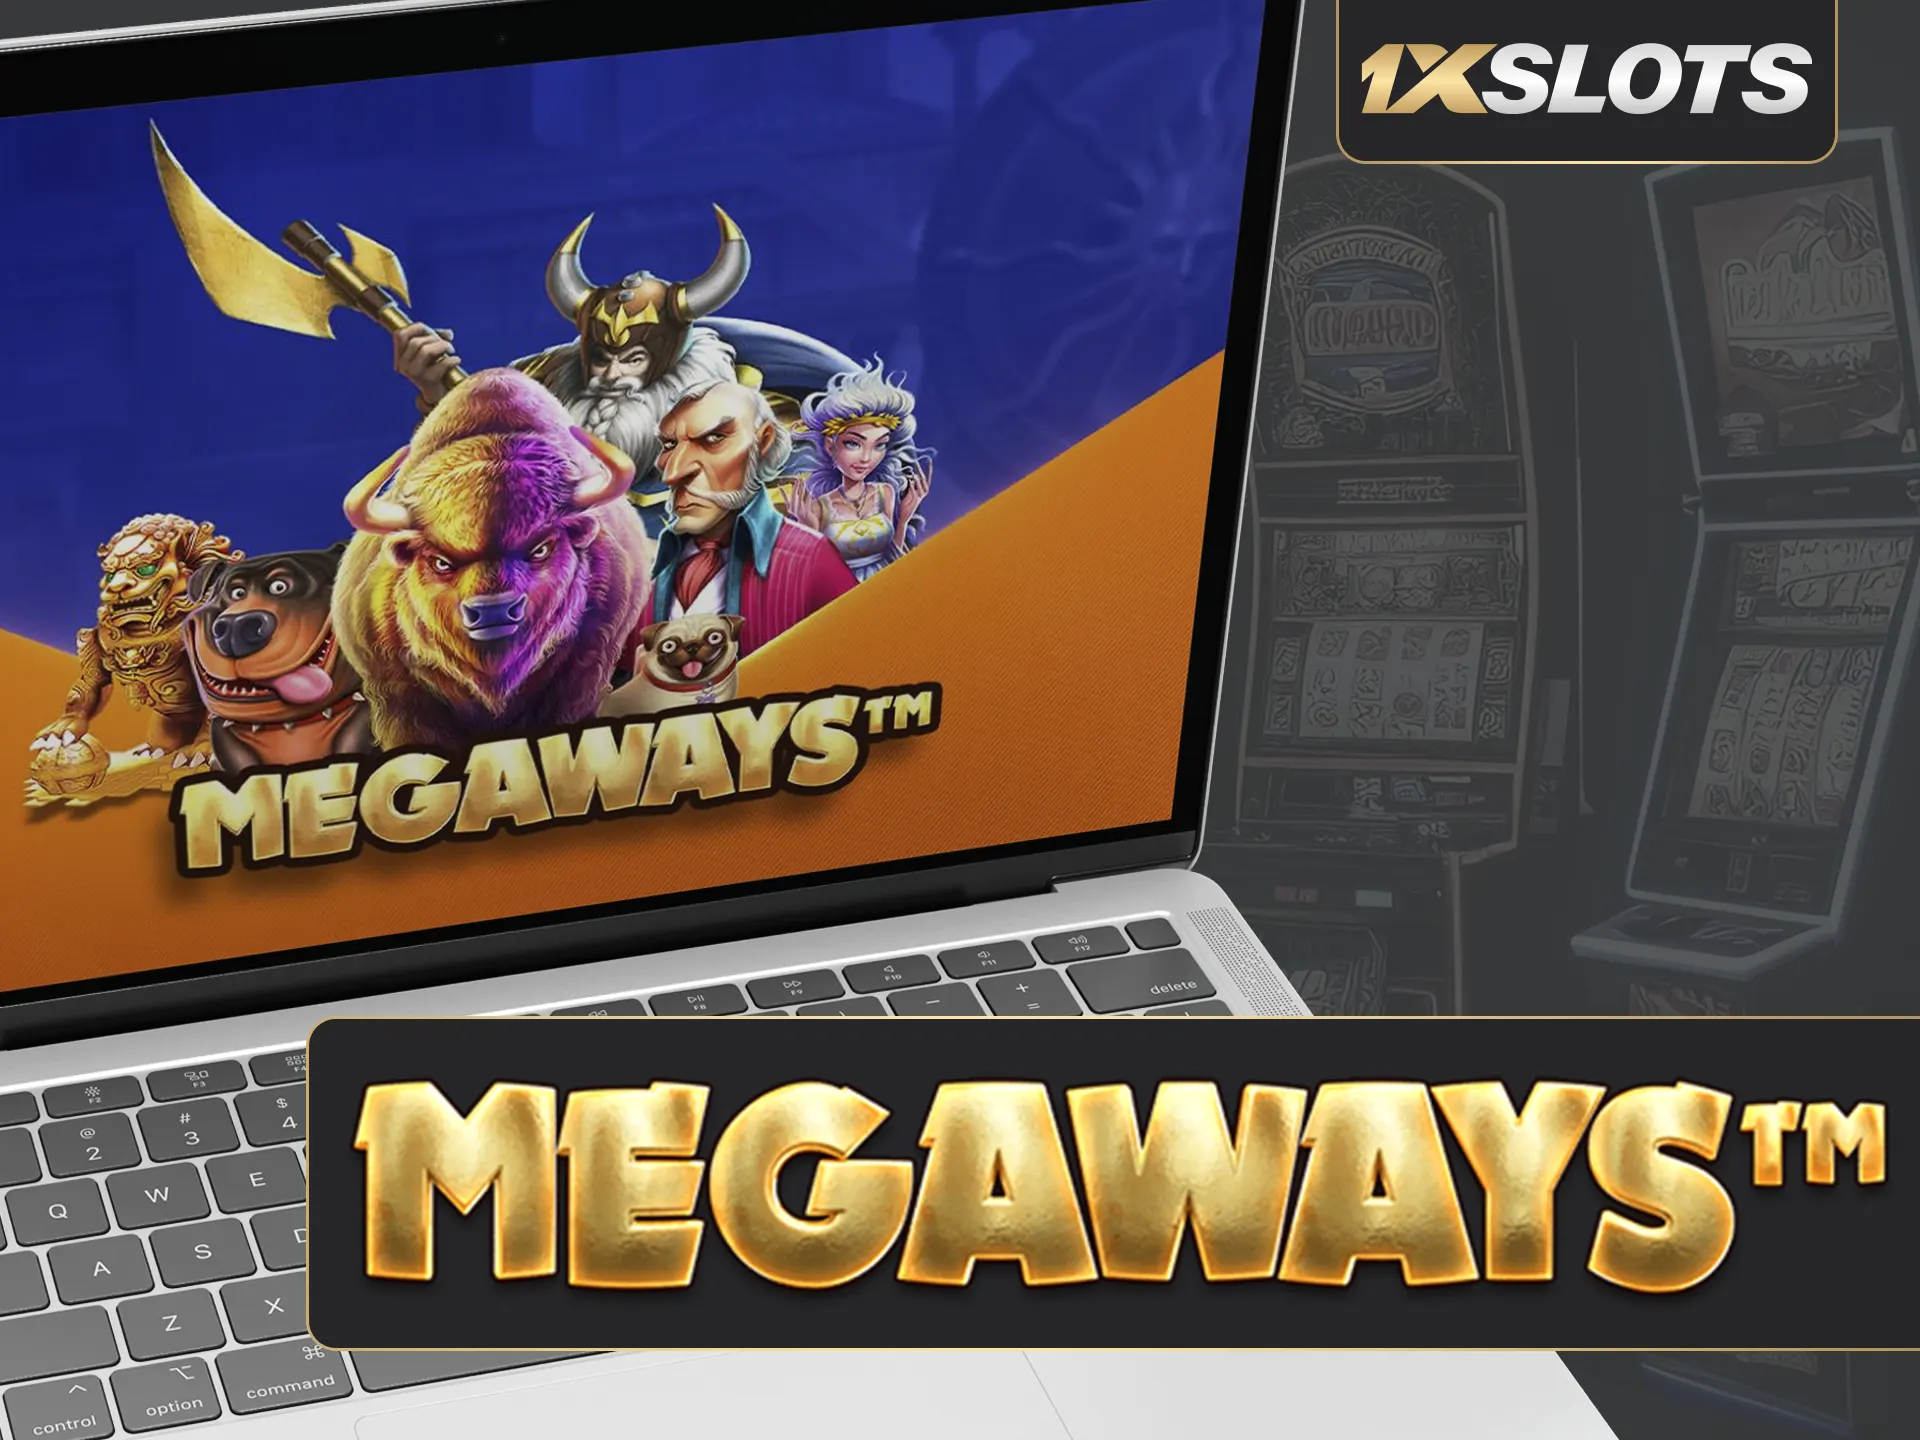 Prepare-se para slots Megaways revolucionários na 1xSlots.